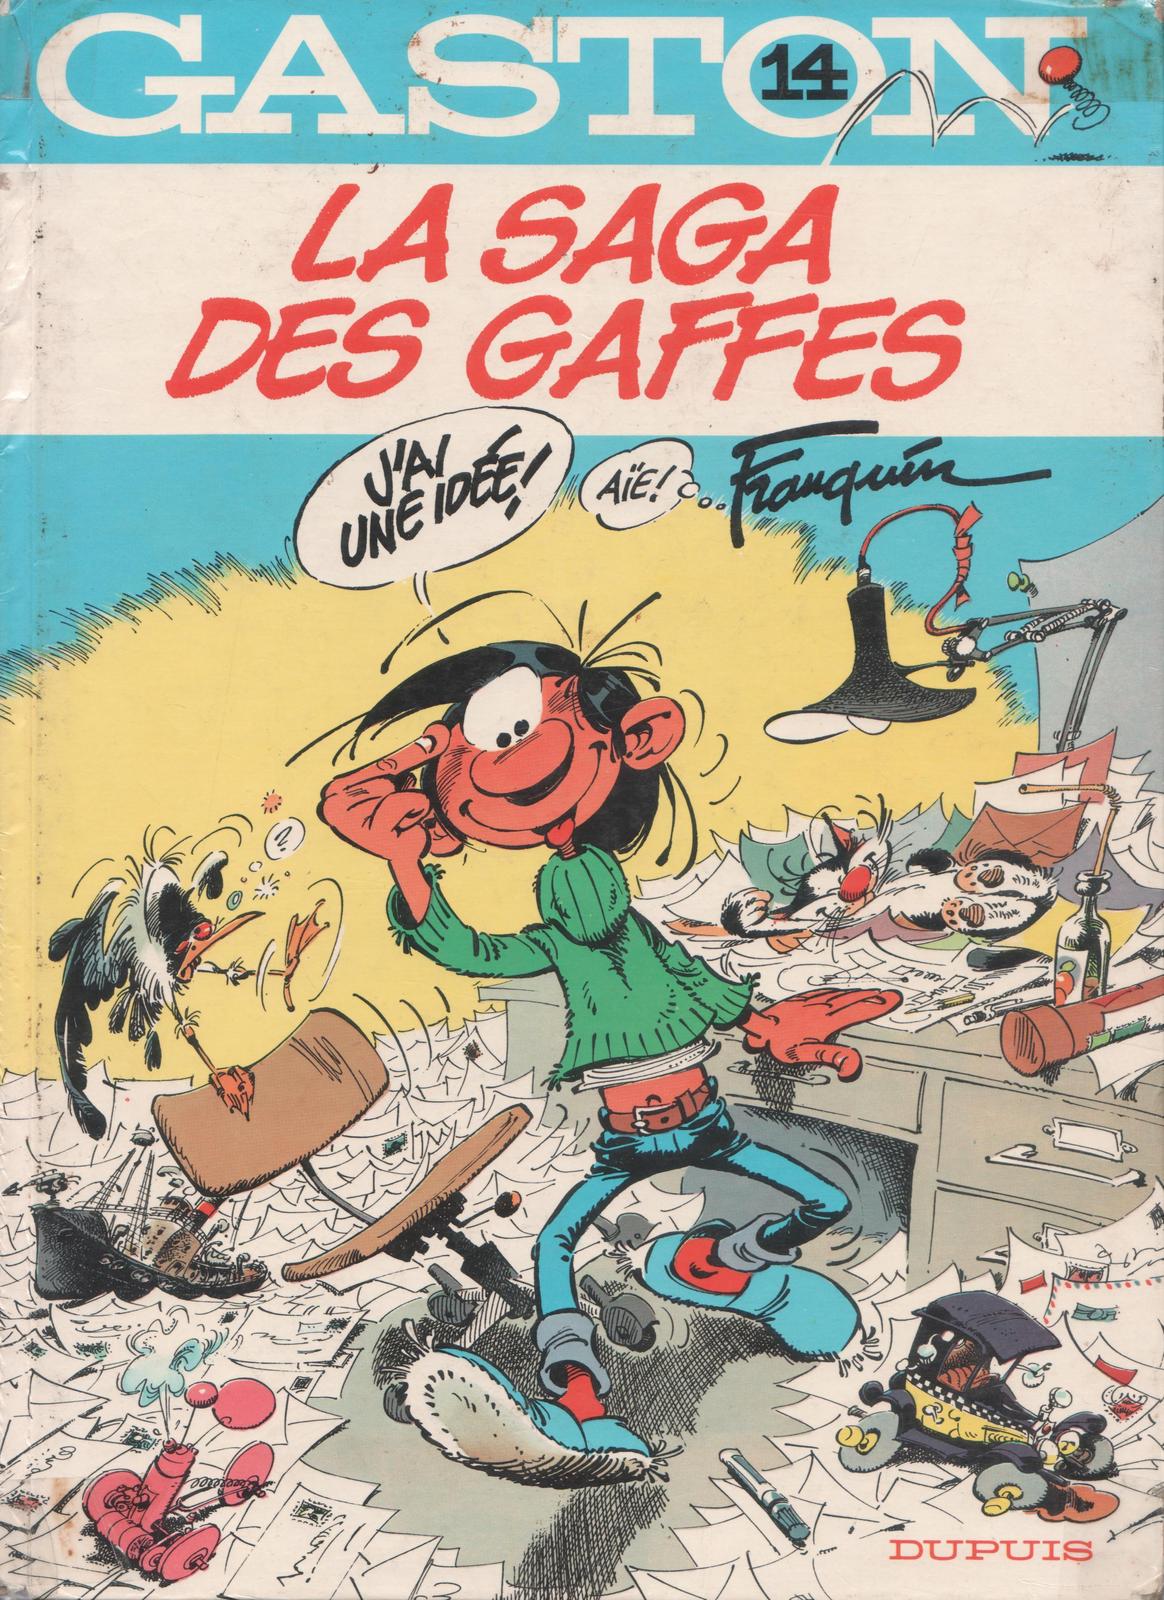 André Franquin: La saga des gaffes (French language)